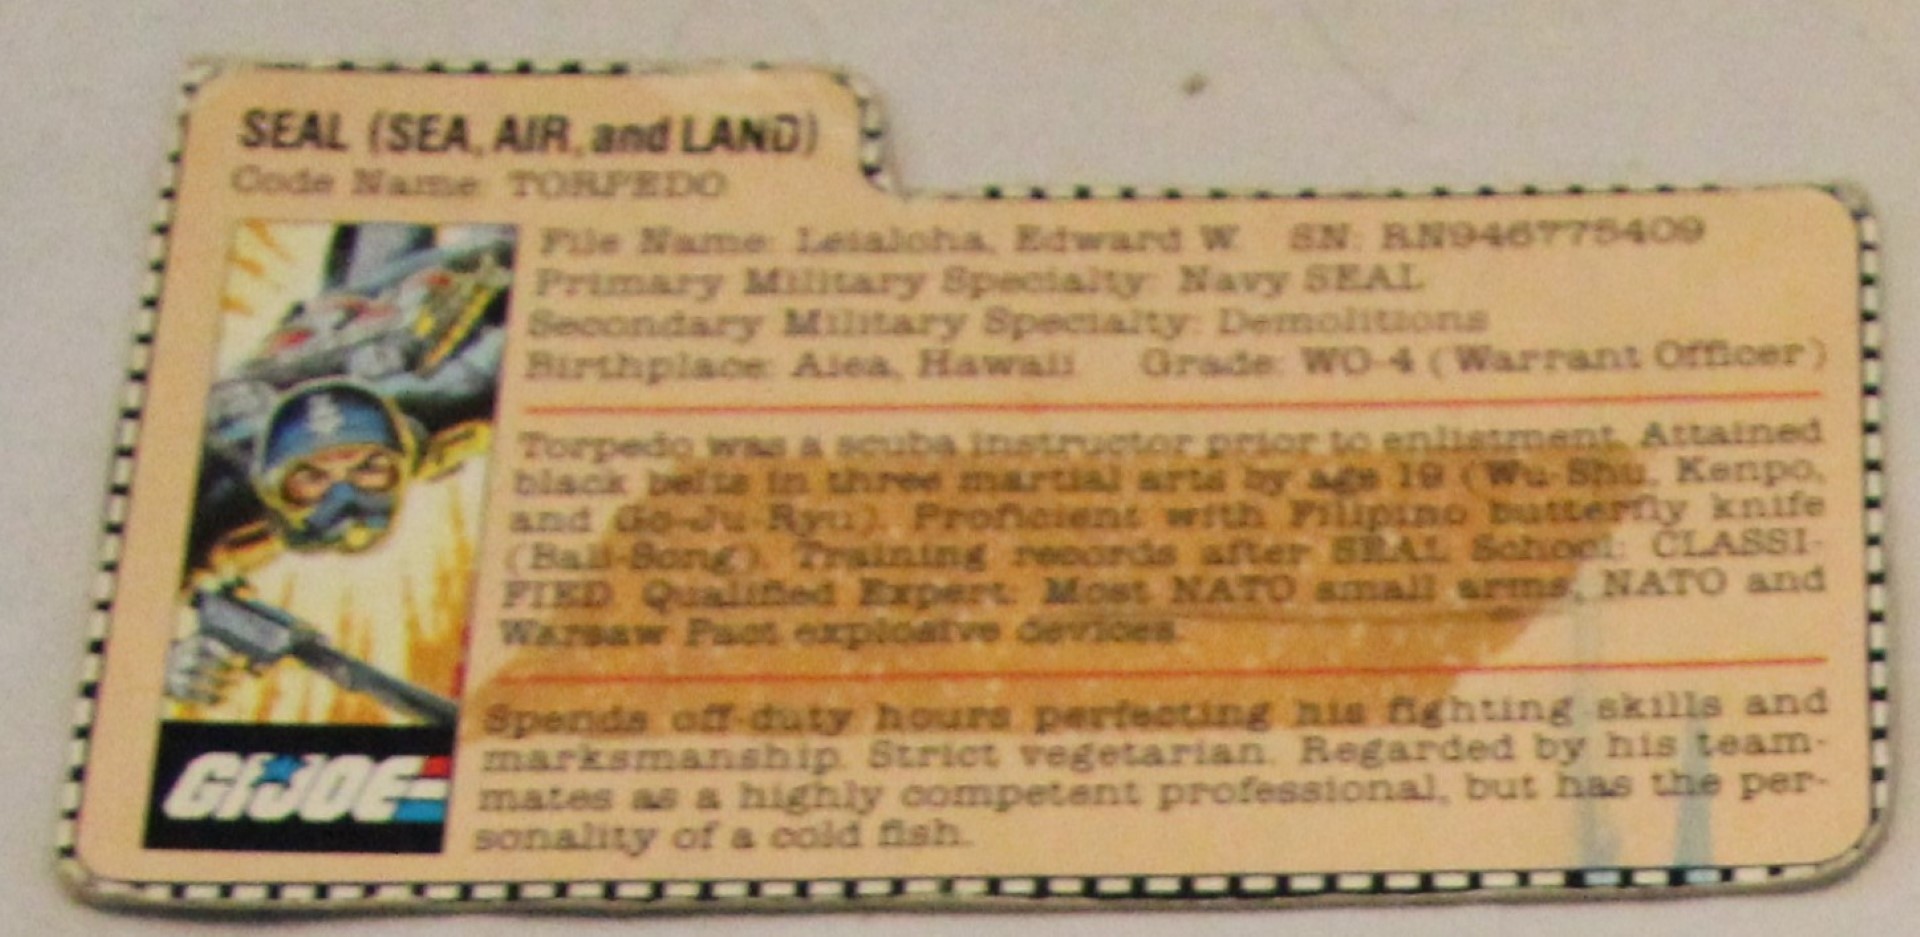 1983 torpedo file card